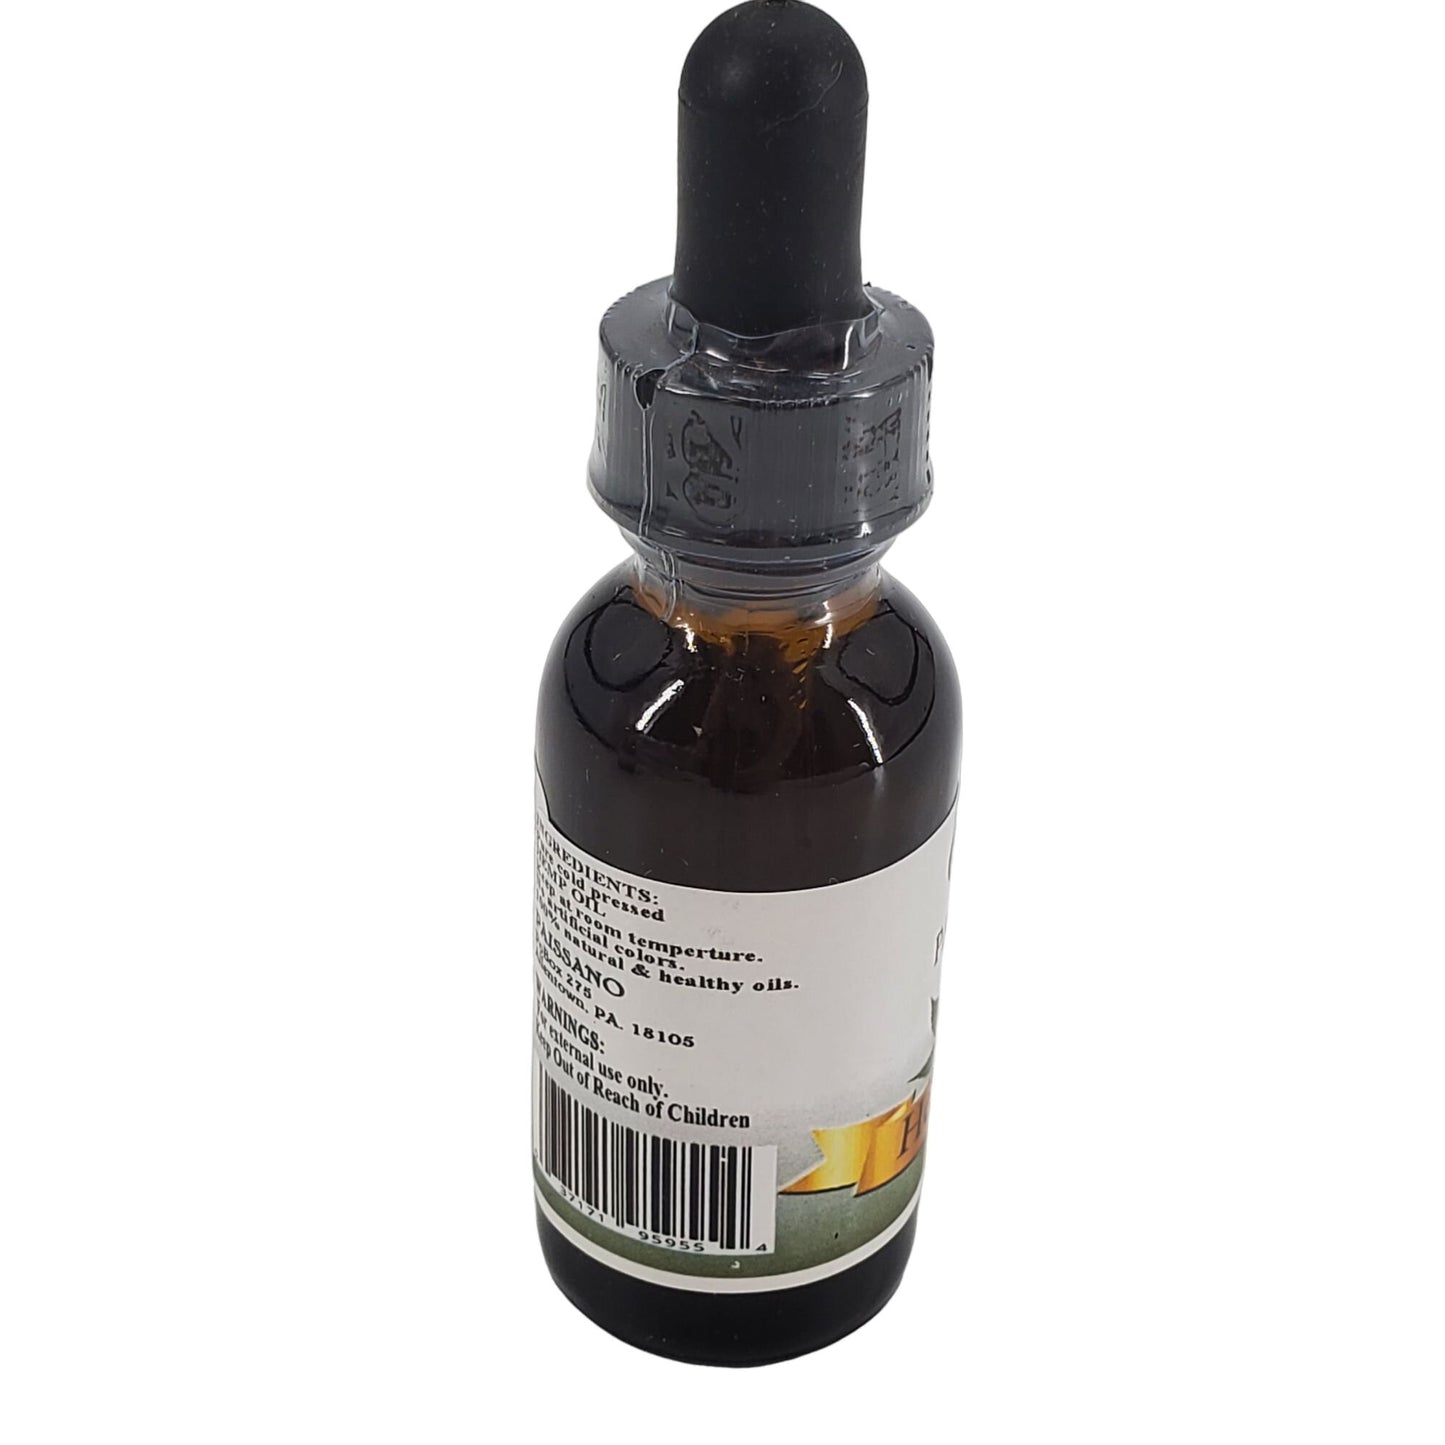 Paissano Hemp Oil: All-Natural Skin Regeneration , Moisturizing Oil, Omega 3 & 6 Fatty Acids | 1 ounce Glass Bottle Dropper included